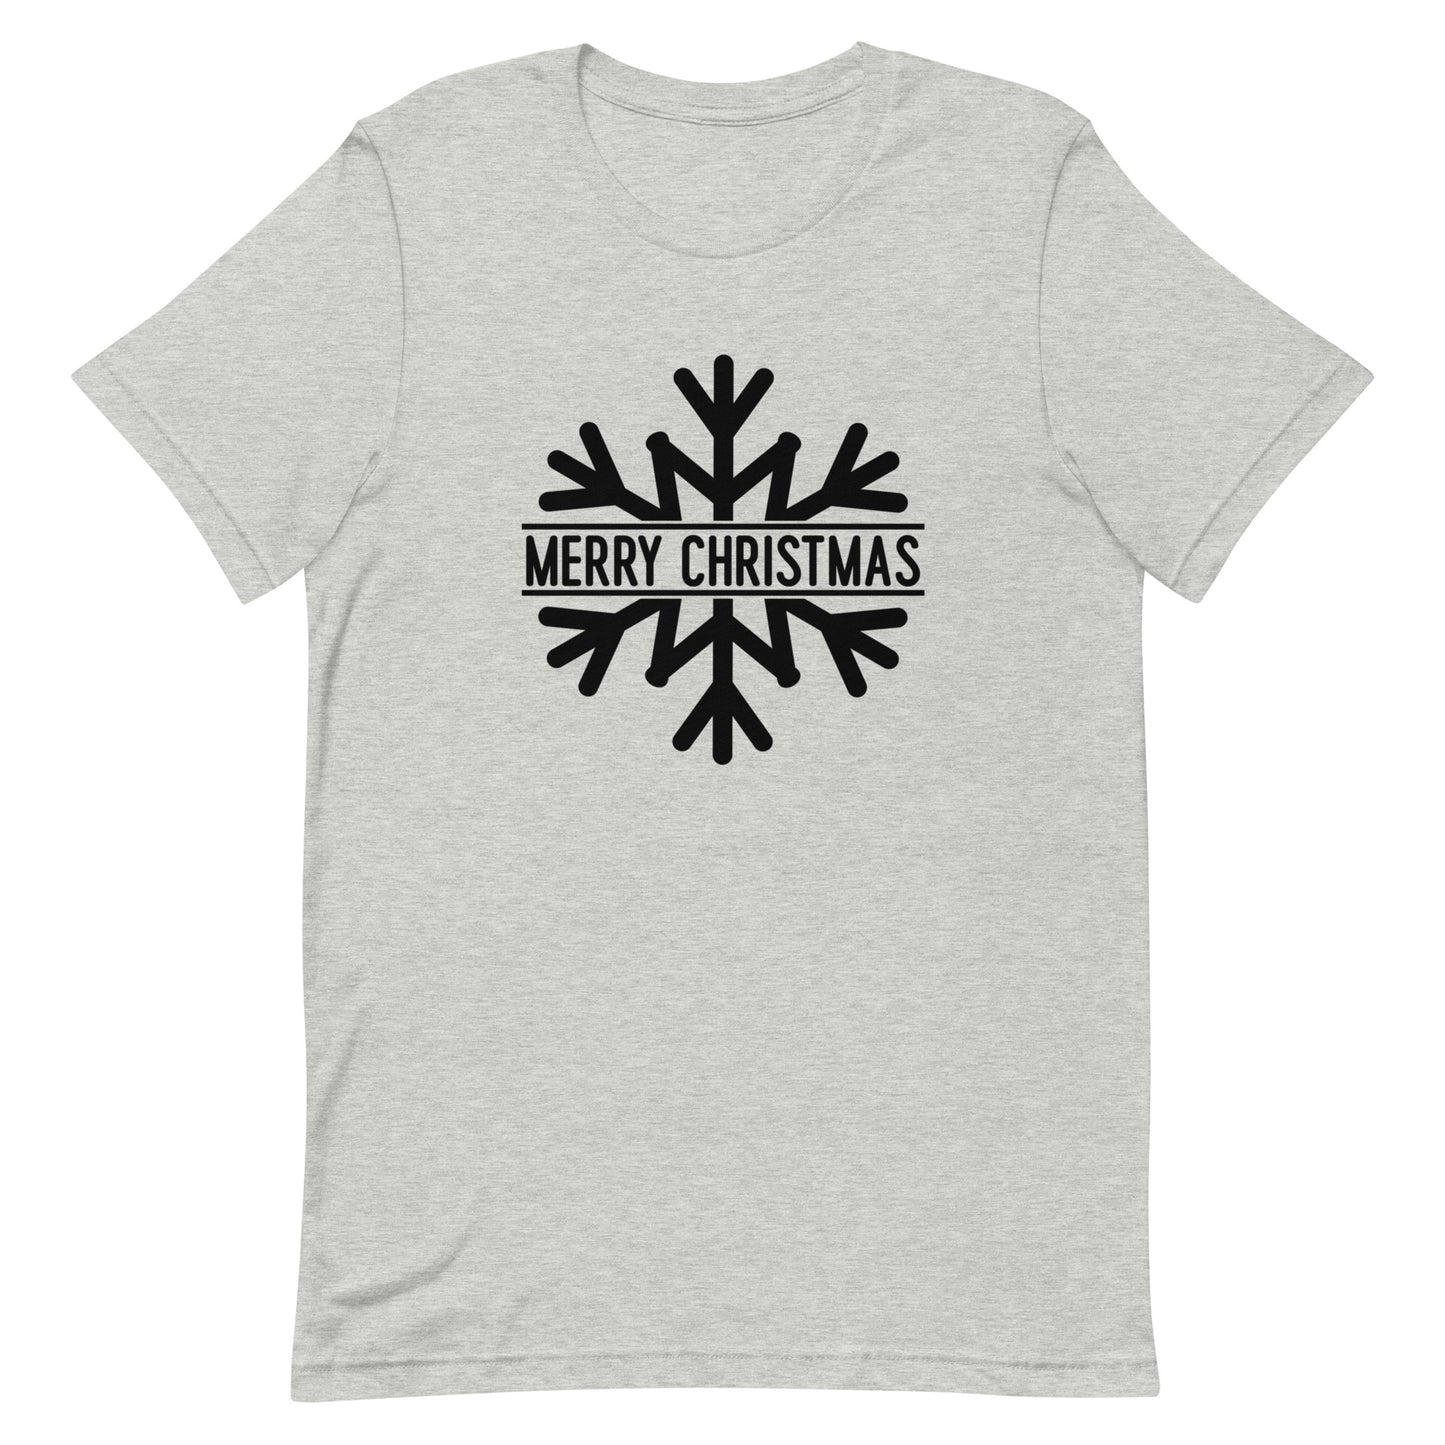 Merry Christmas Unisex t-shirt